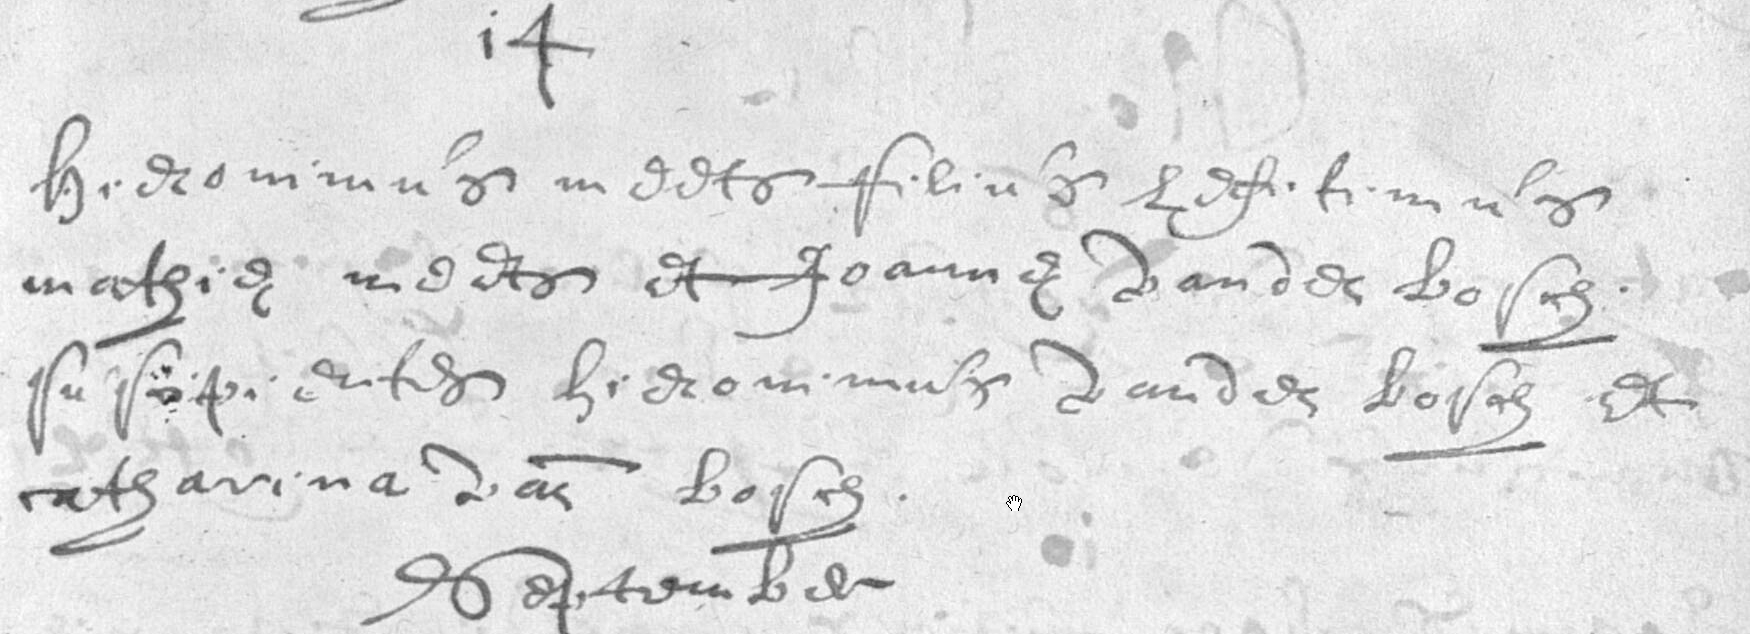 1661-HieronimusMeerts14Jul1661MathiasMeertsJoannavandenBosch.jpg